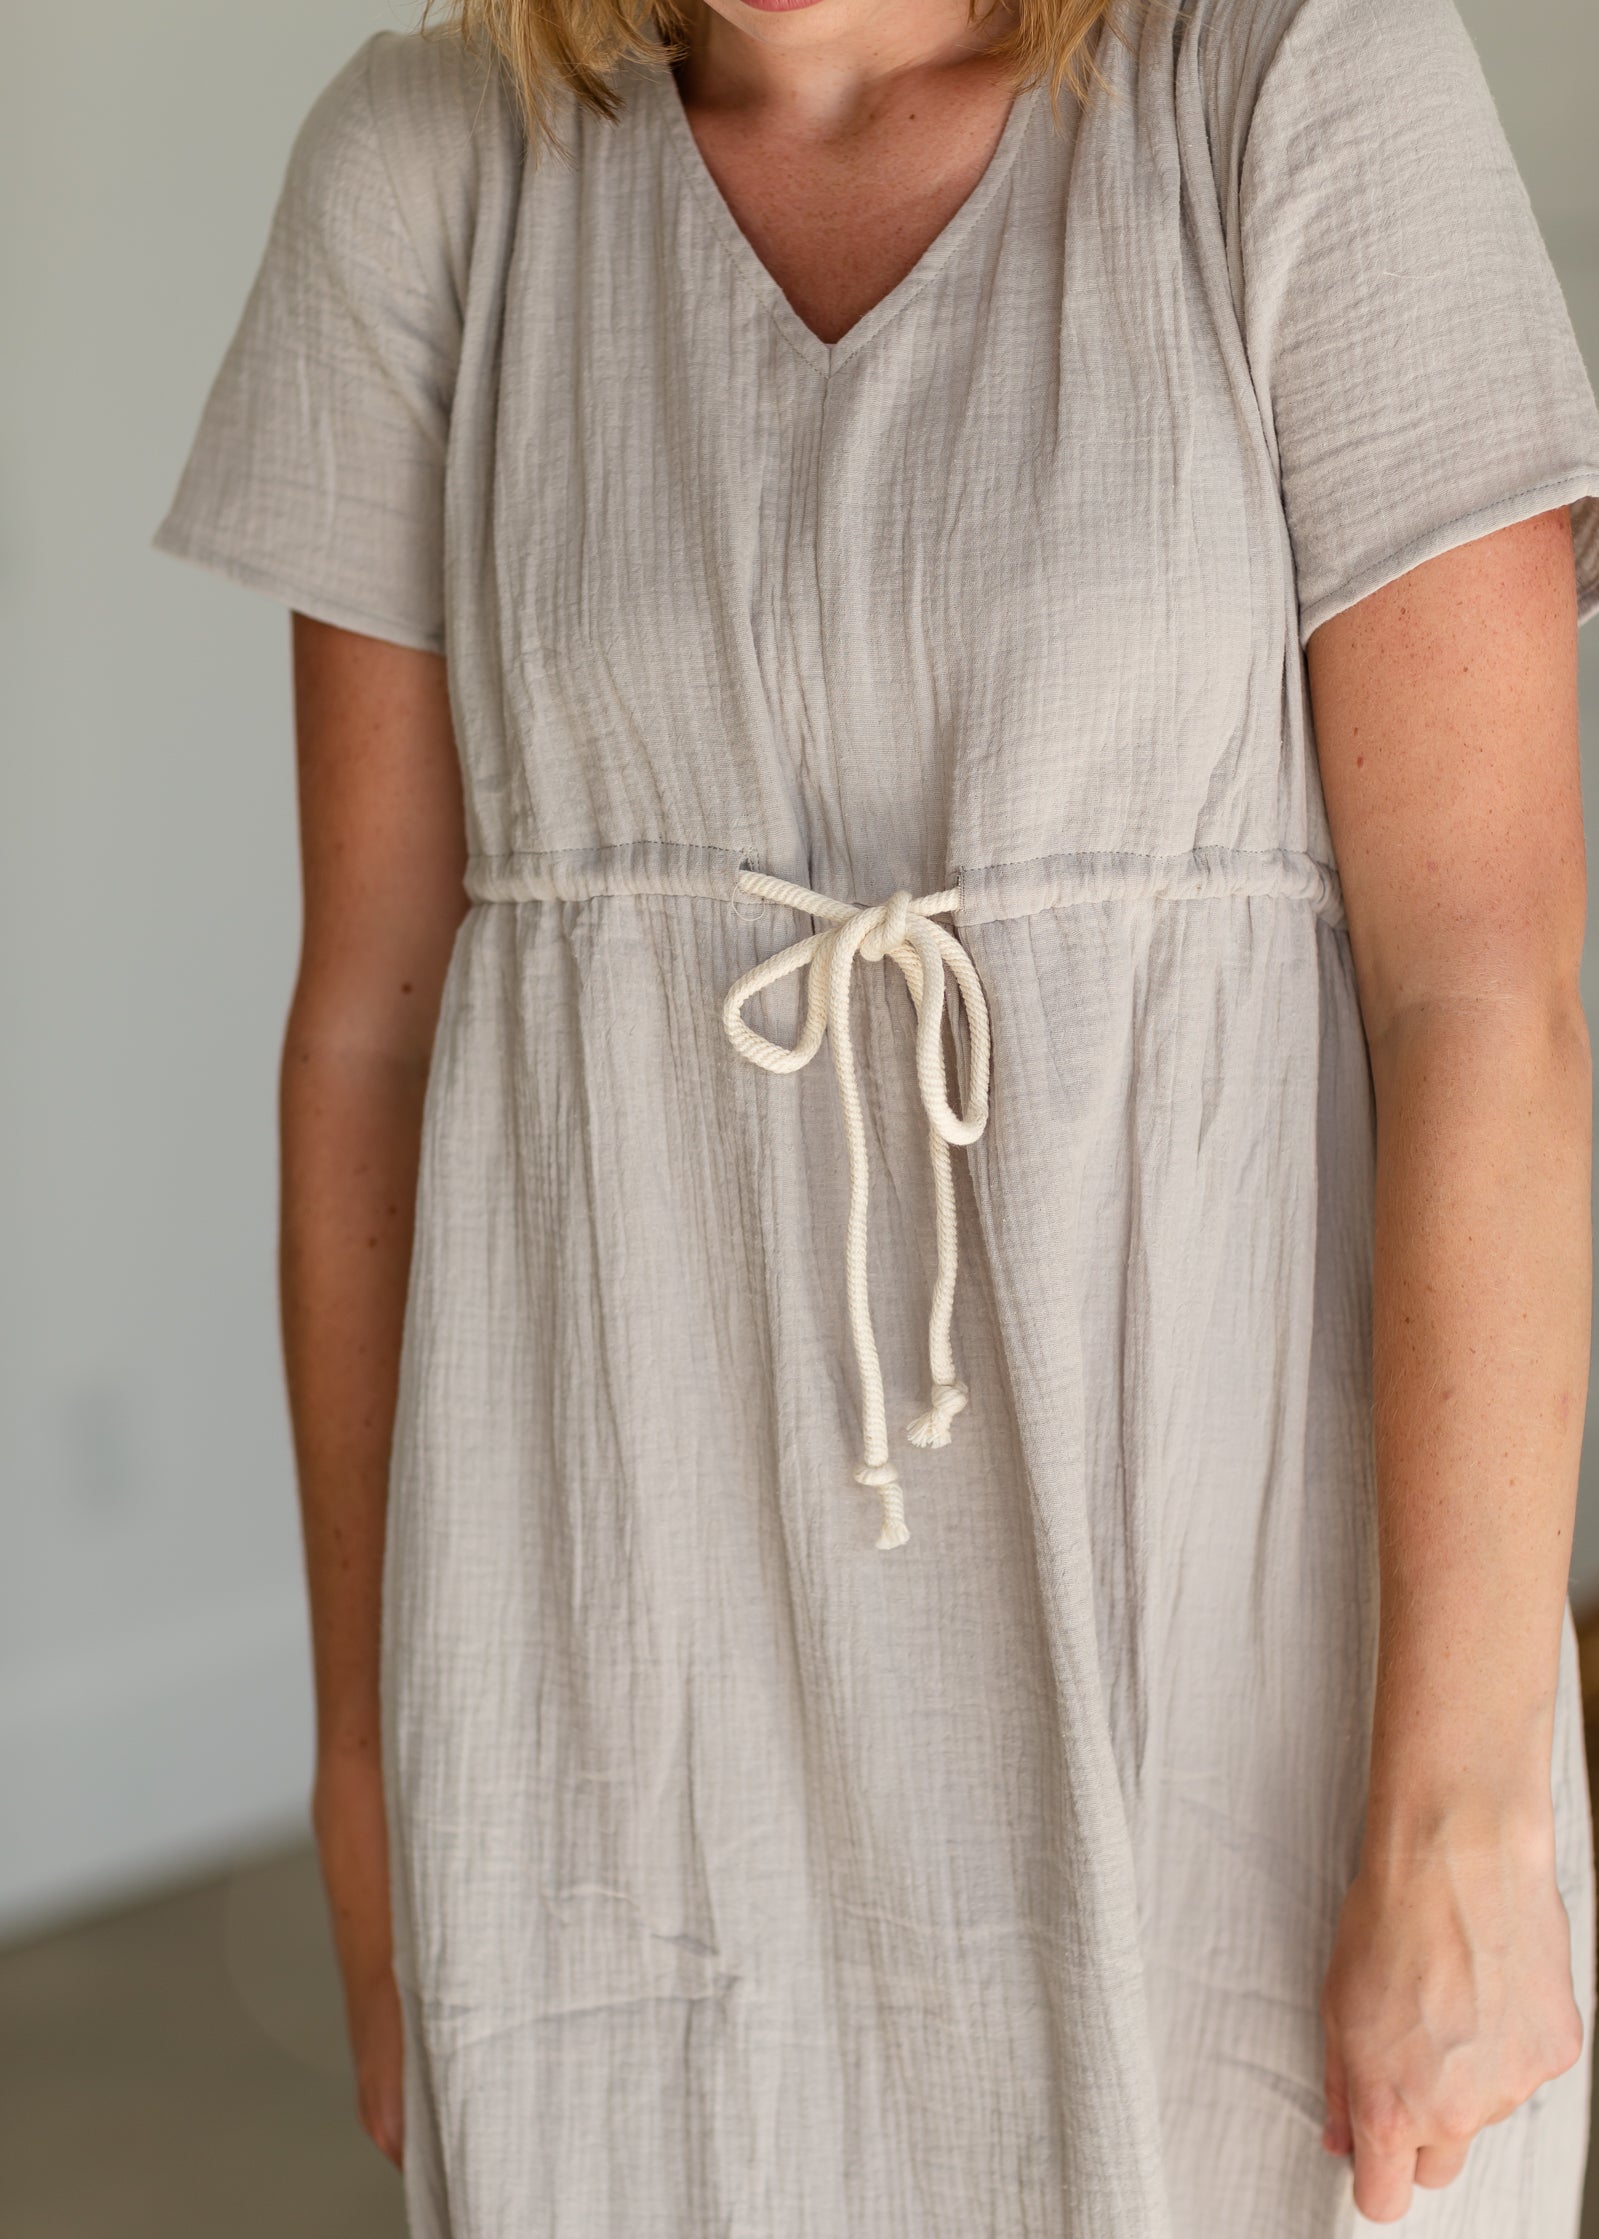 Gray Rope Tie Waist Midi Dress - FINAL SALE Dresses